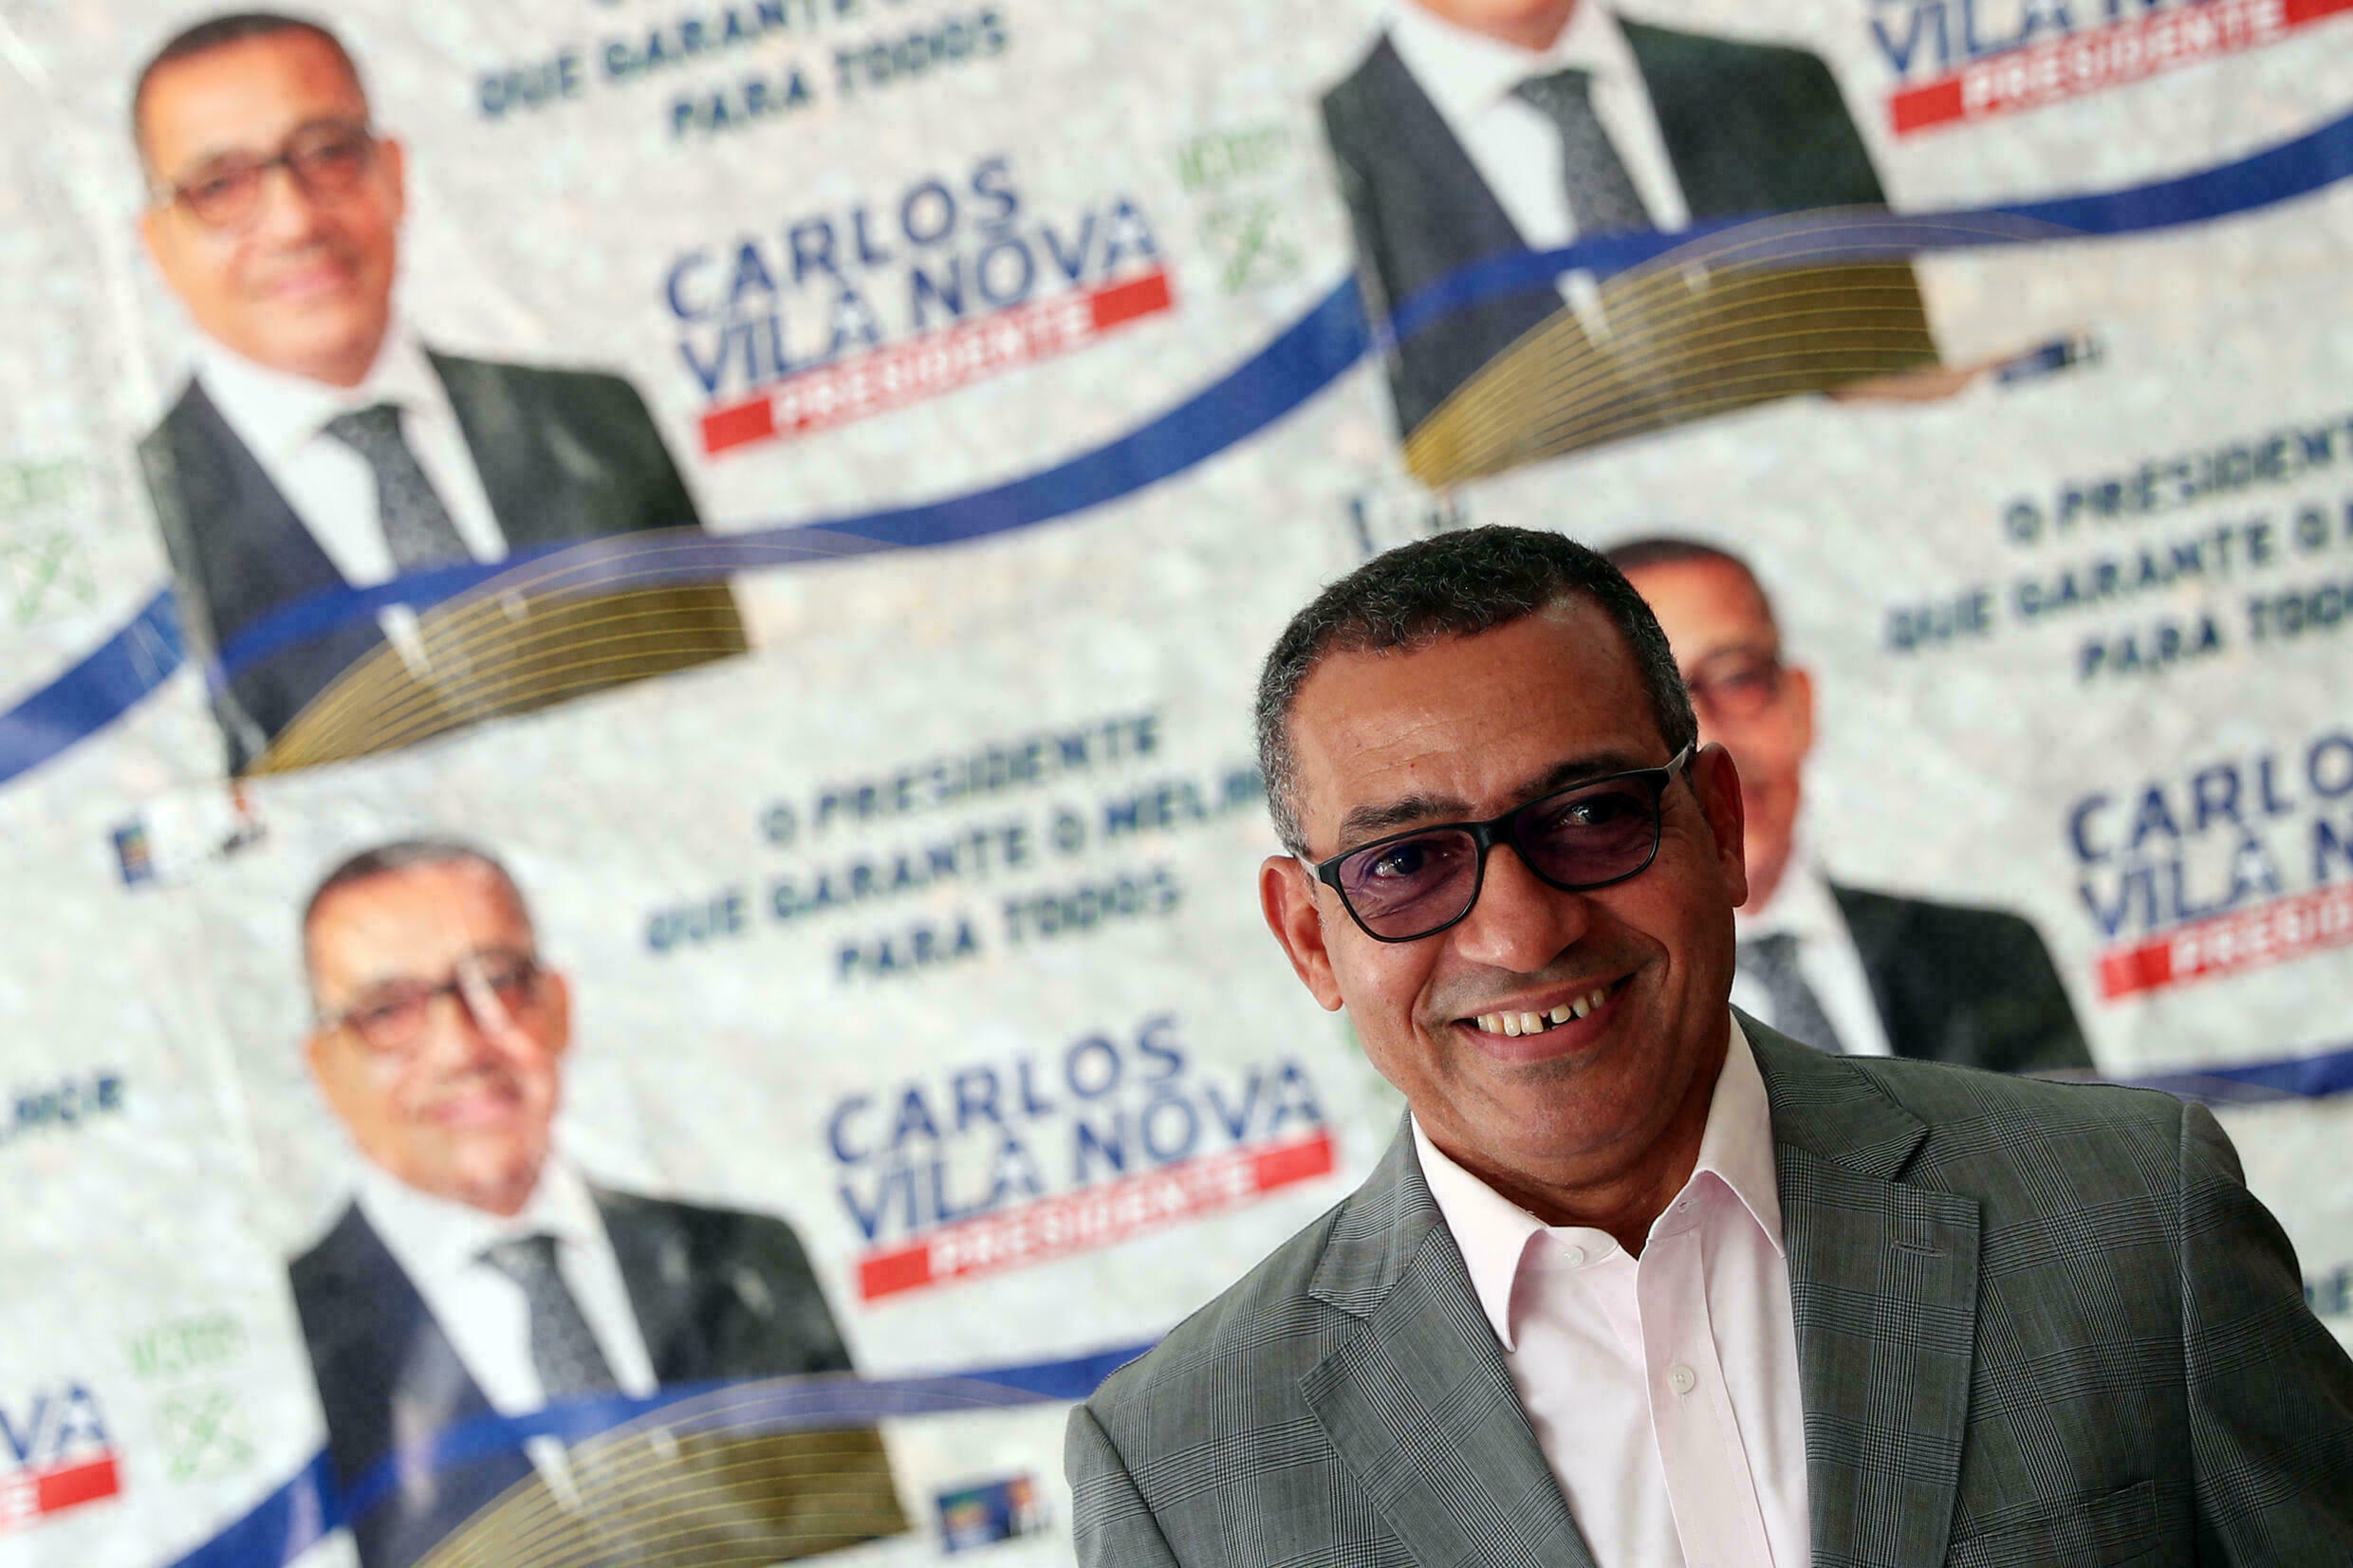 São Tomé e Príncipe.  Carlos Vila Nova, o presidente “minoritário”